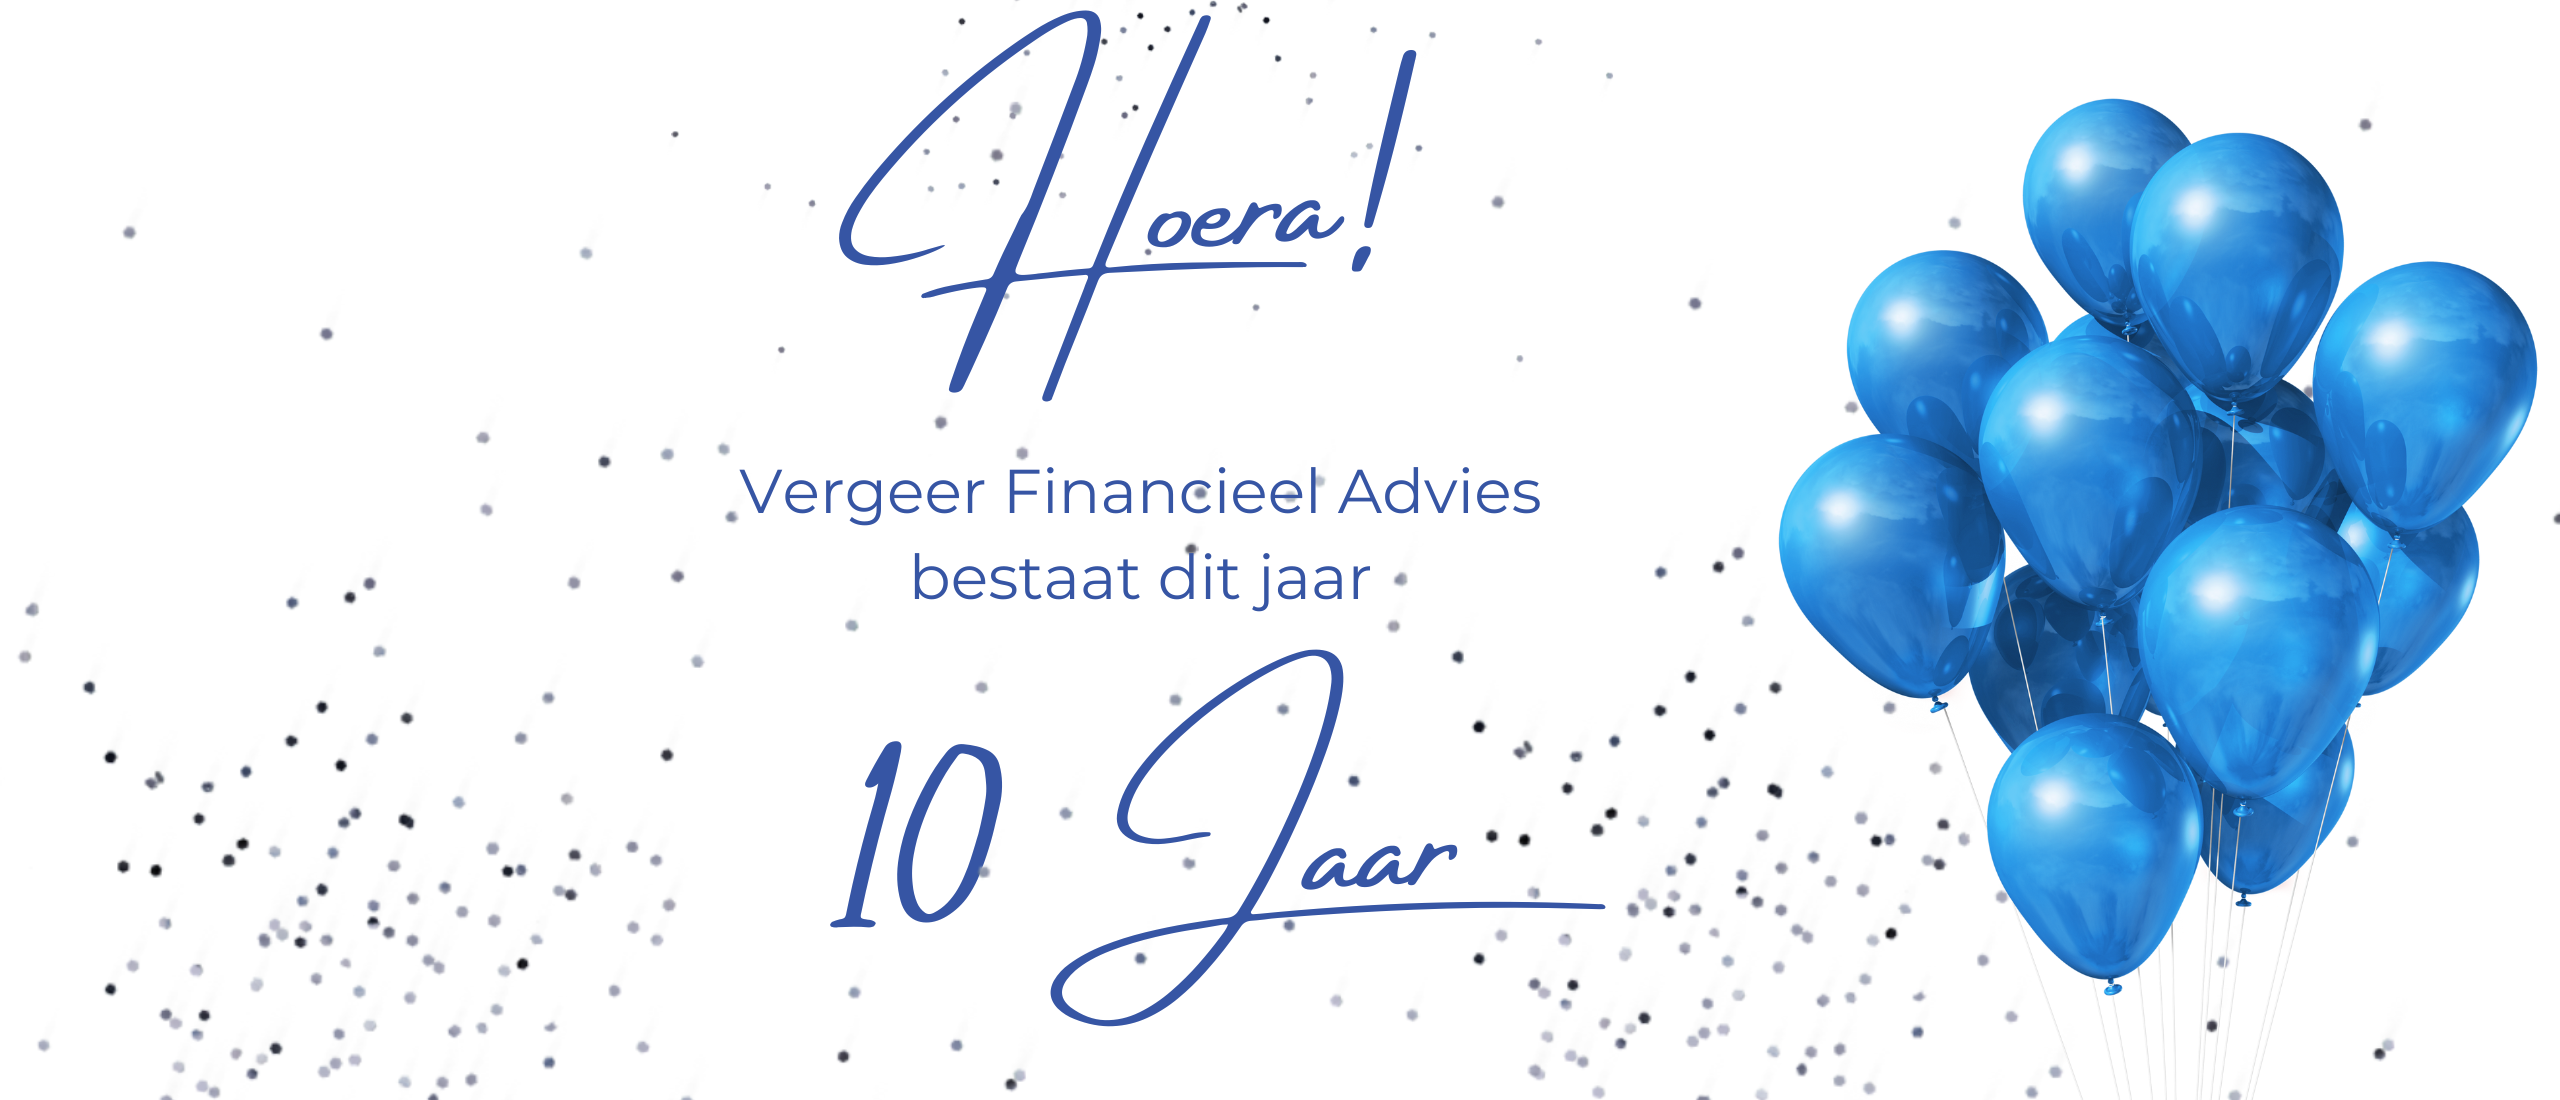 10 jaar Vergeer Financieel Advies